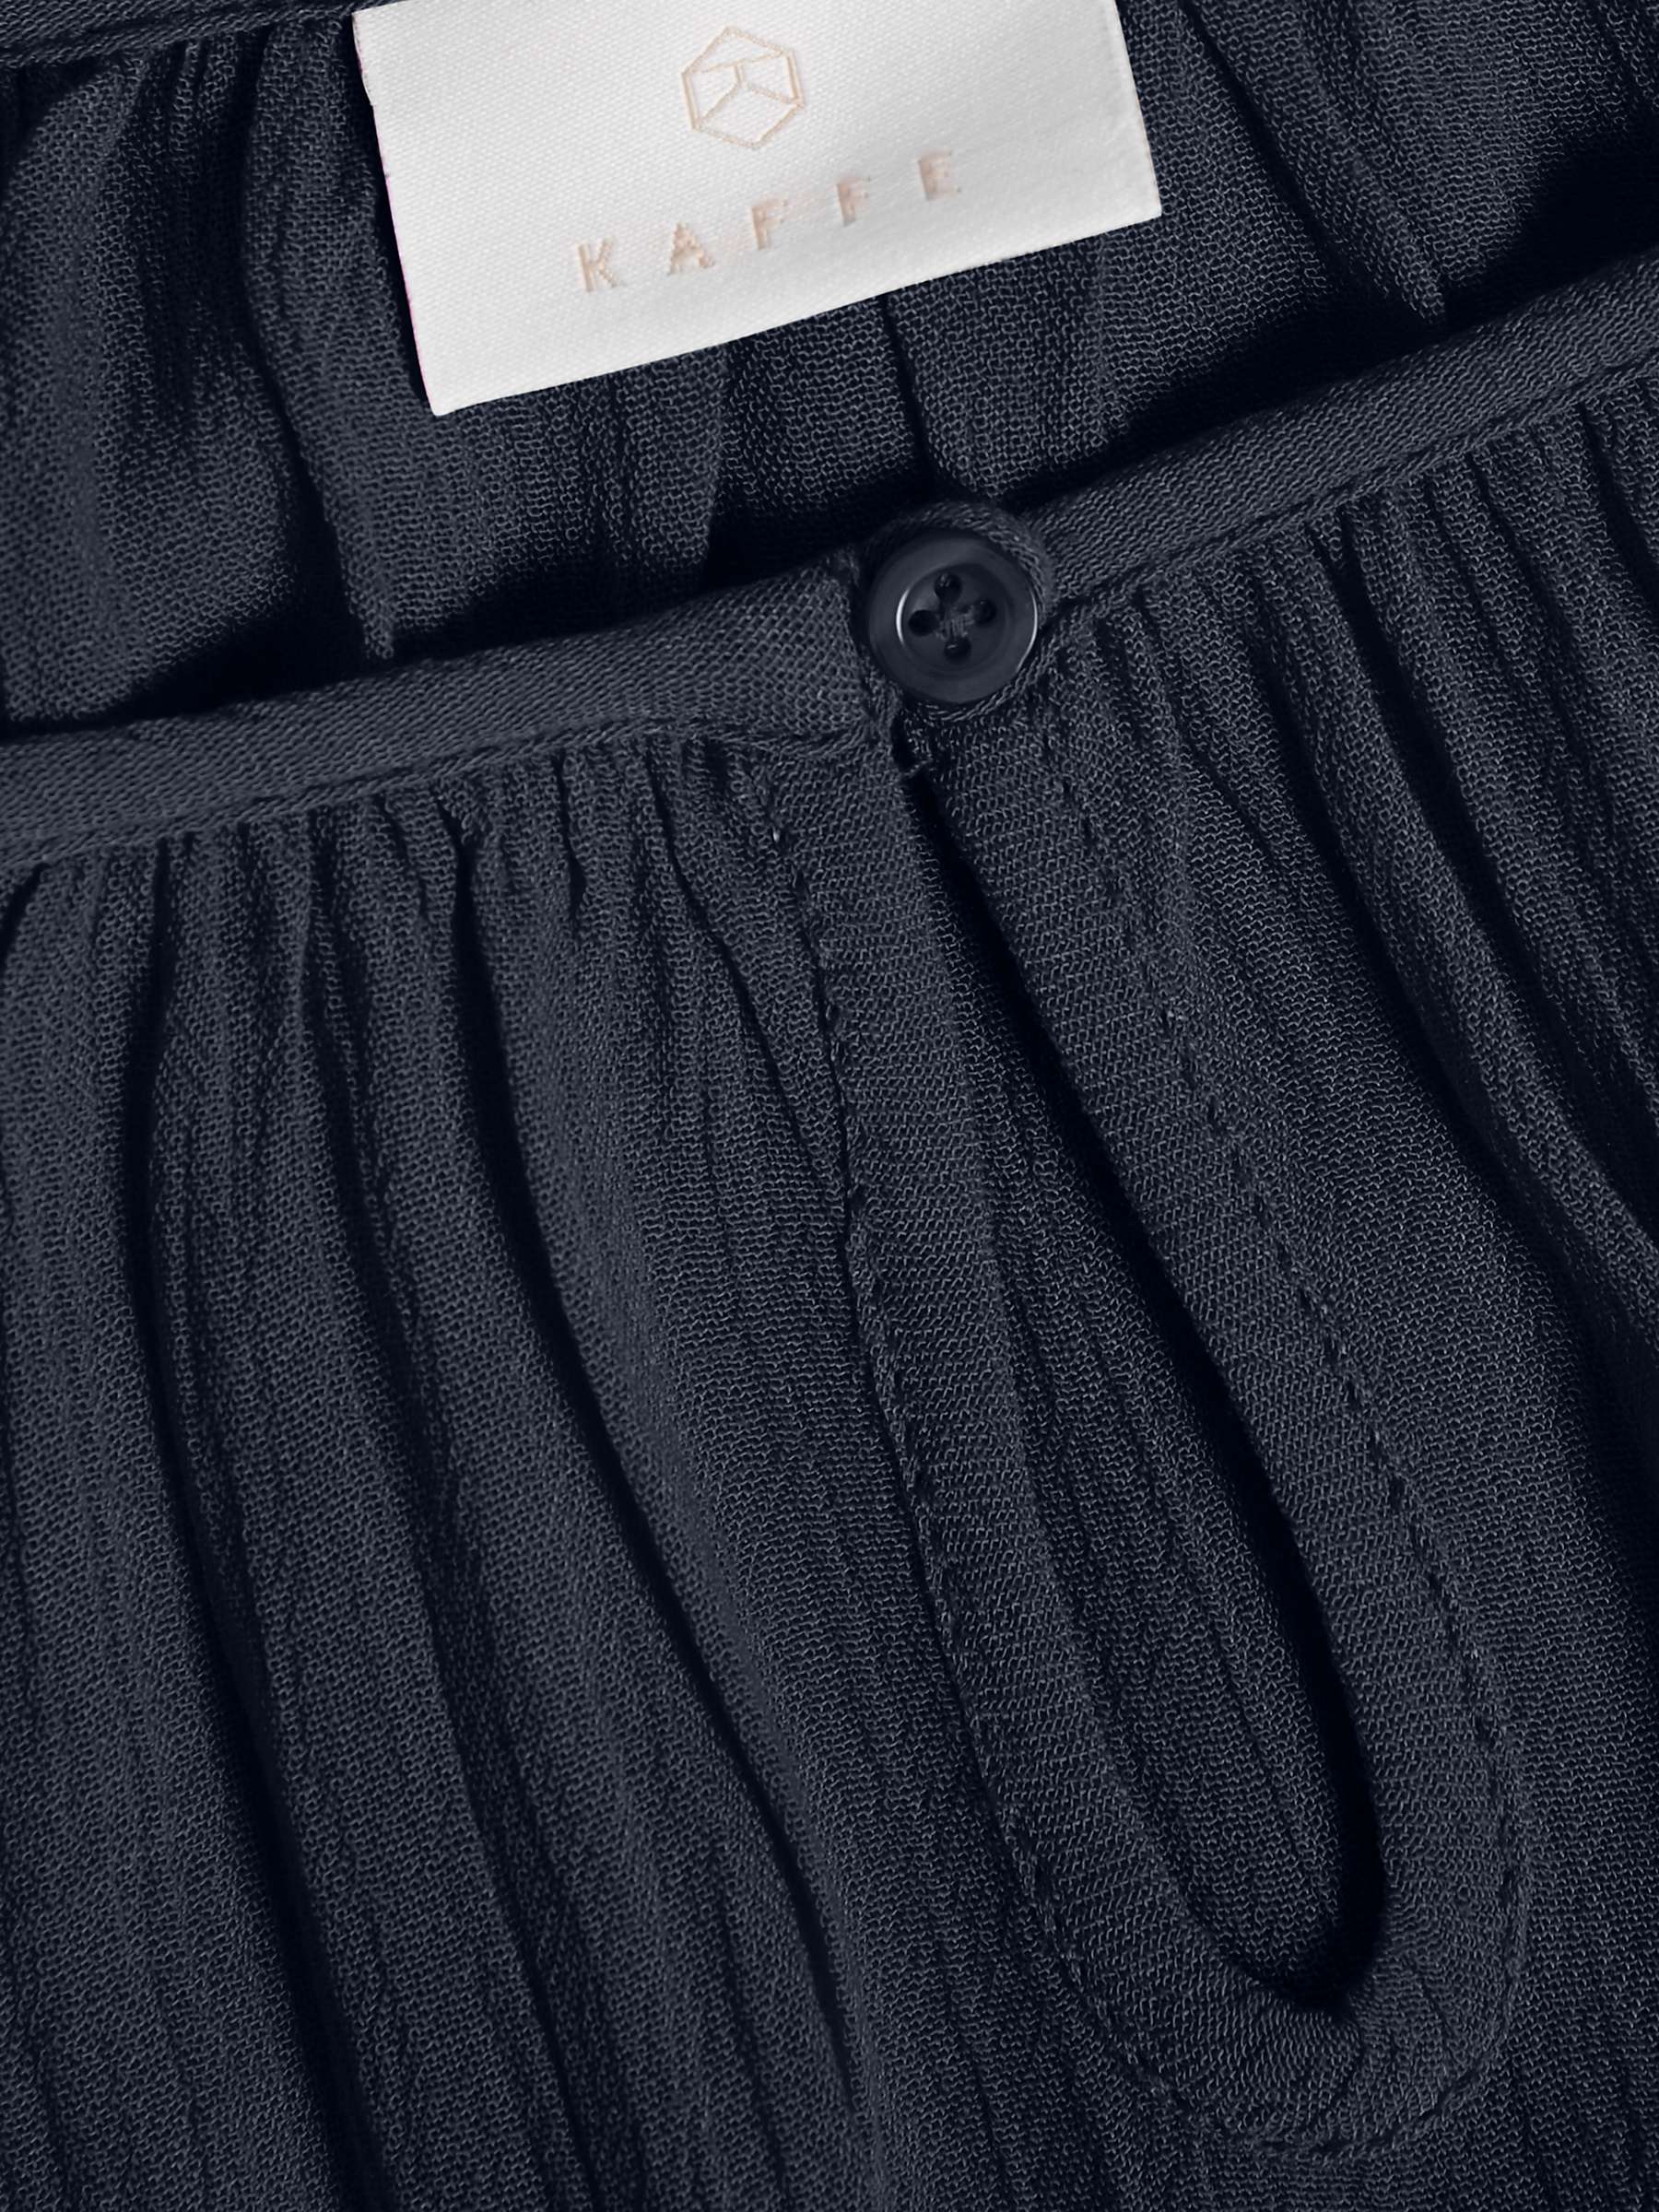 Buy KAFFE Amber Short Sleeve Tunic Top Online at johnlewis.com